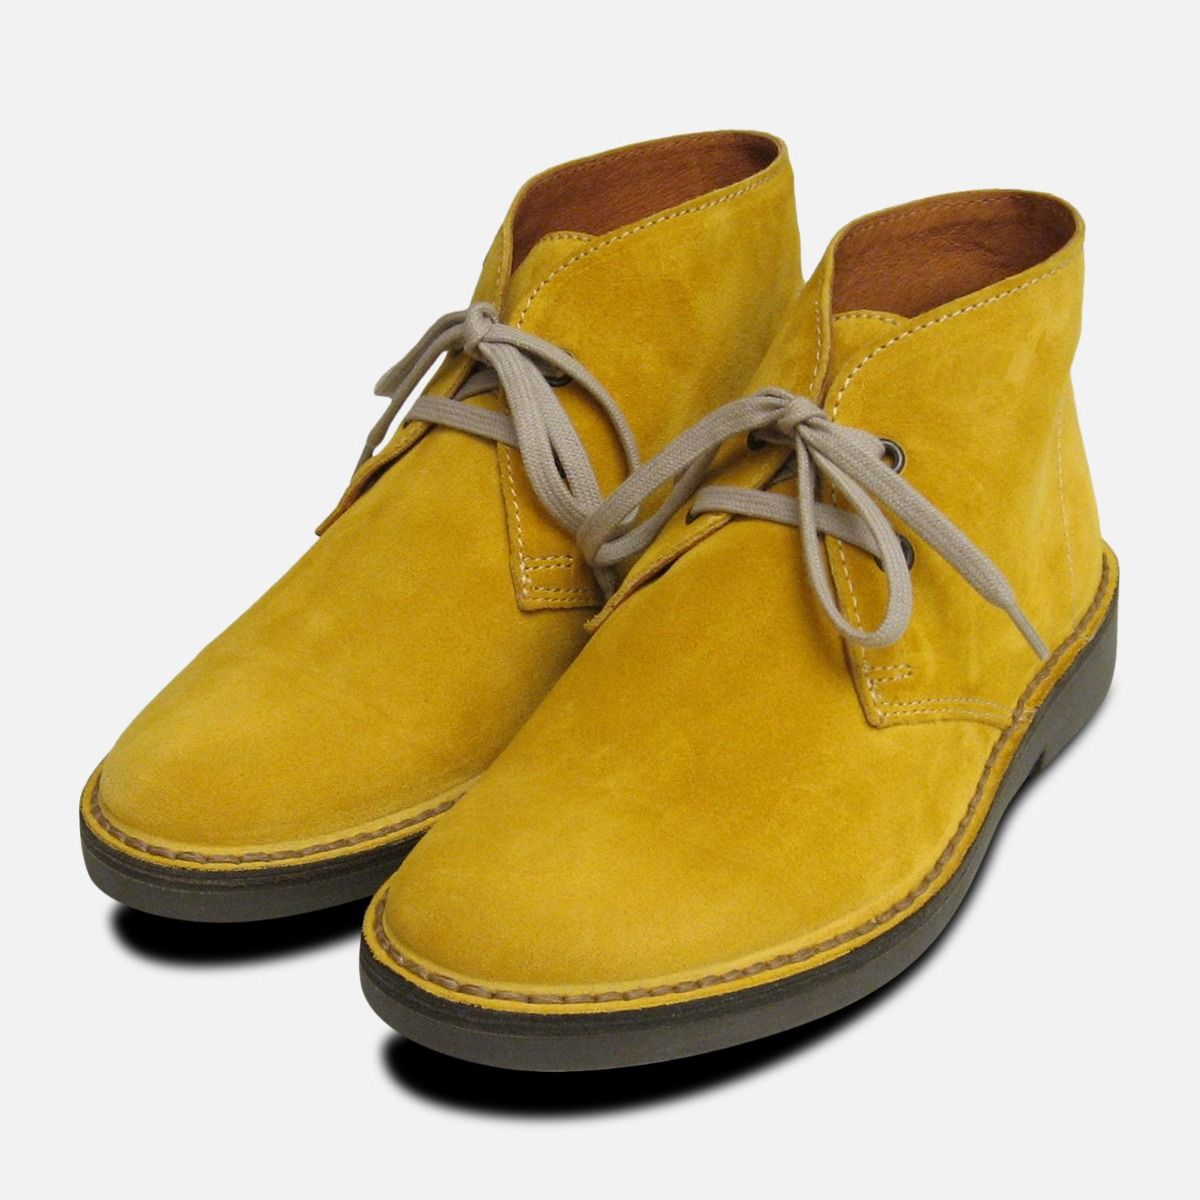 yellow suede booties